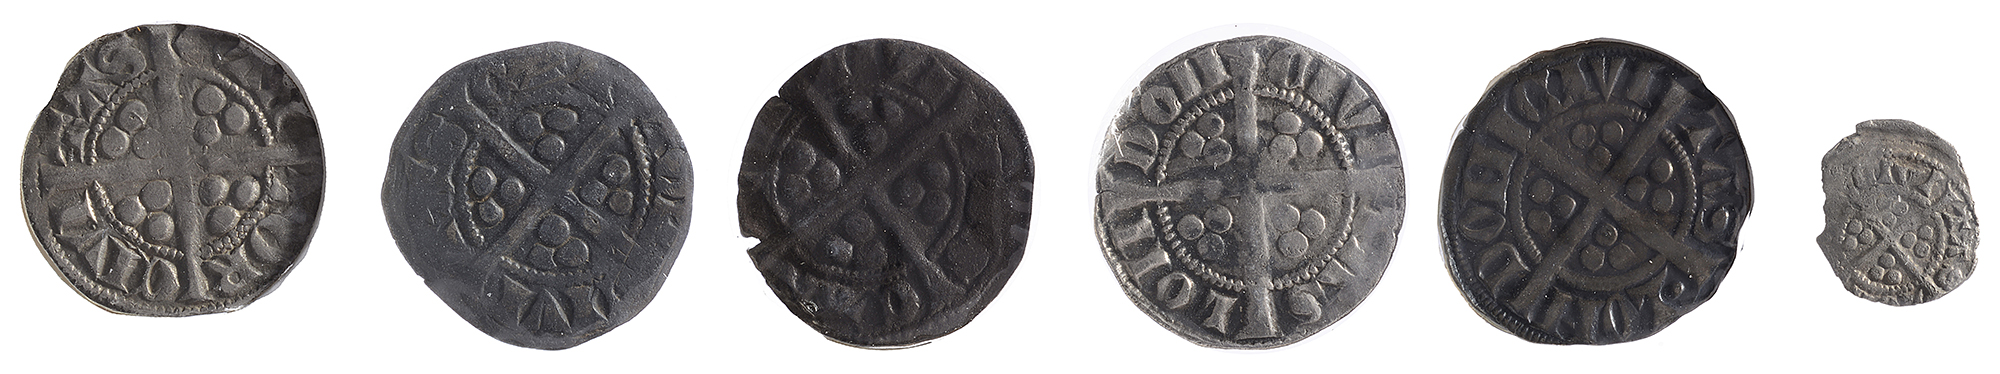 Plantaganet, Edward I (1272-1307) silver long cross penniesfirst Class 10cf Canterbury Long Cross - Image 2 of 2